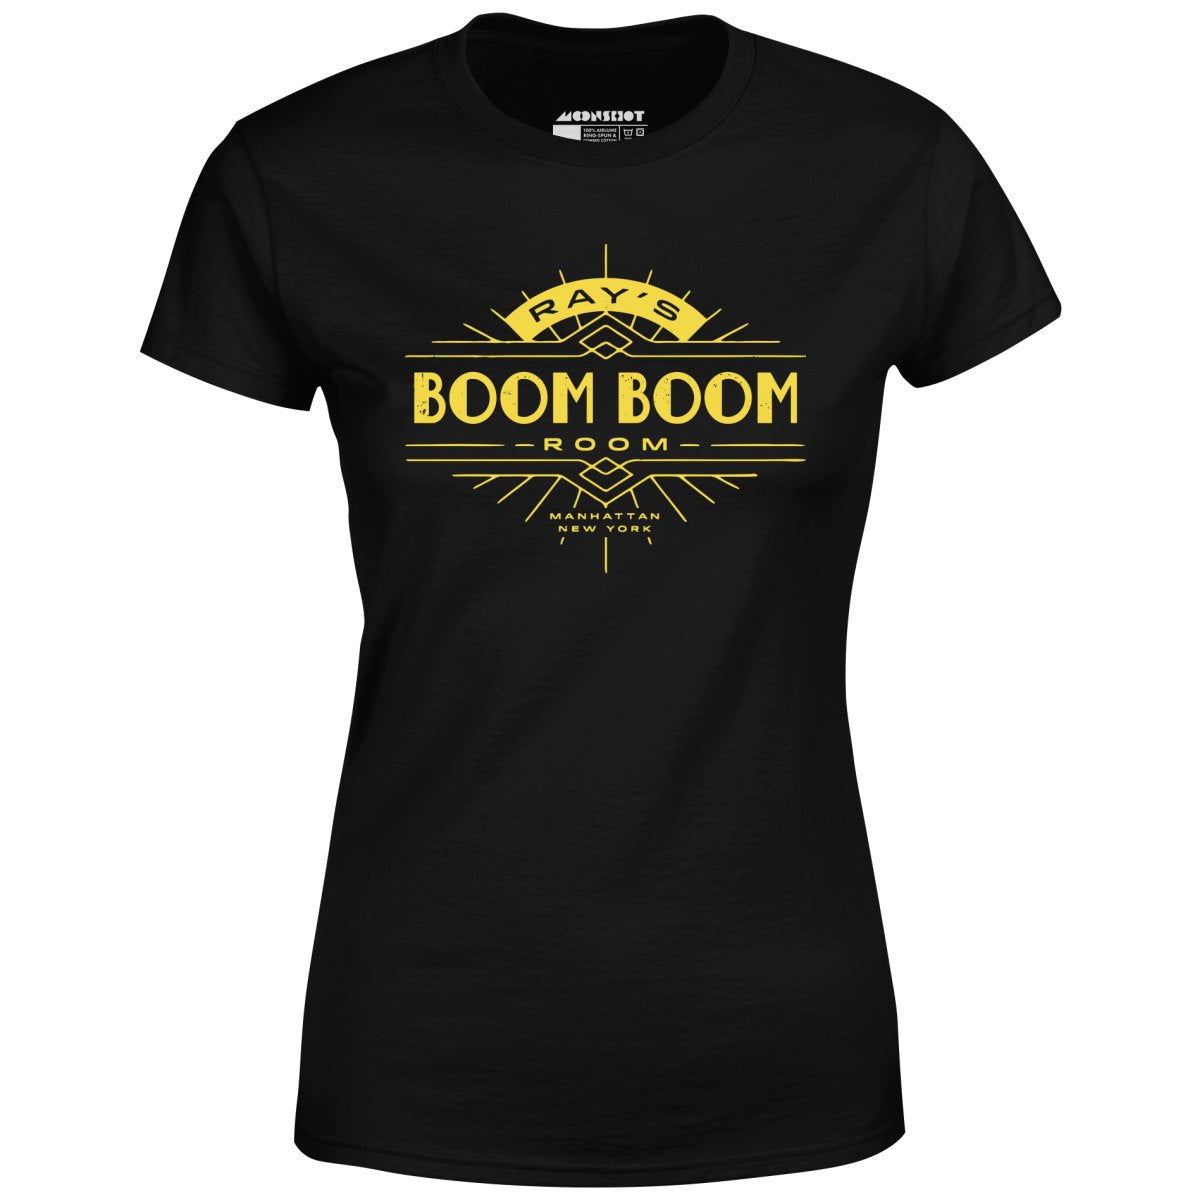 Ray's Boom Boom Room - Women's T-Shirt